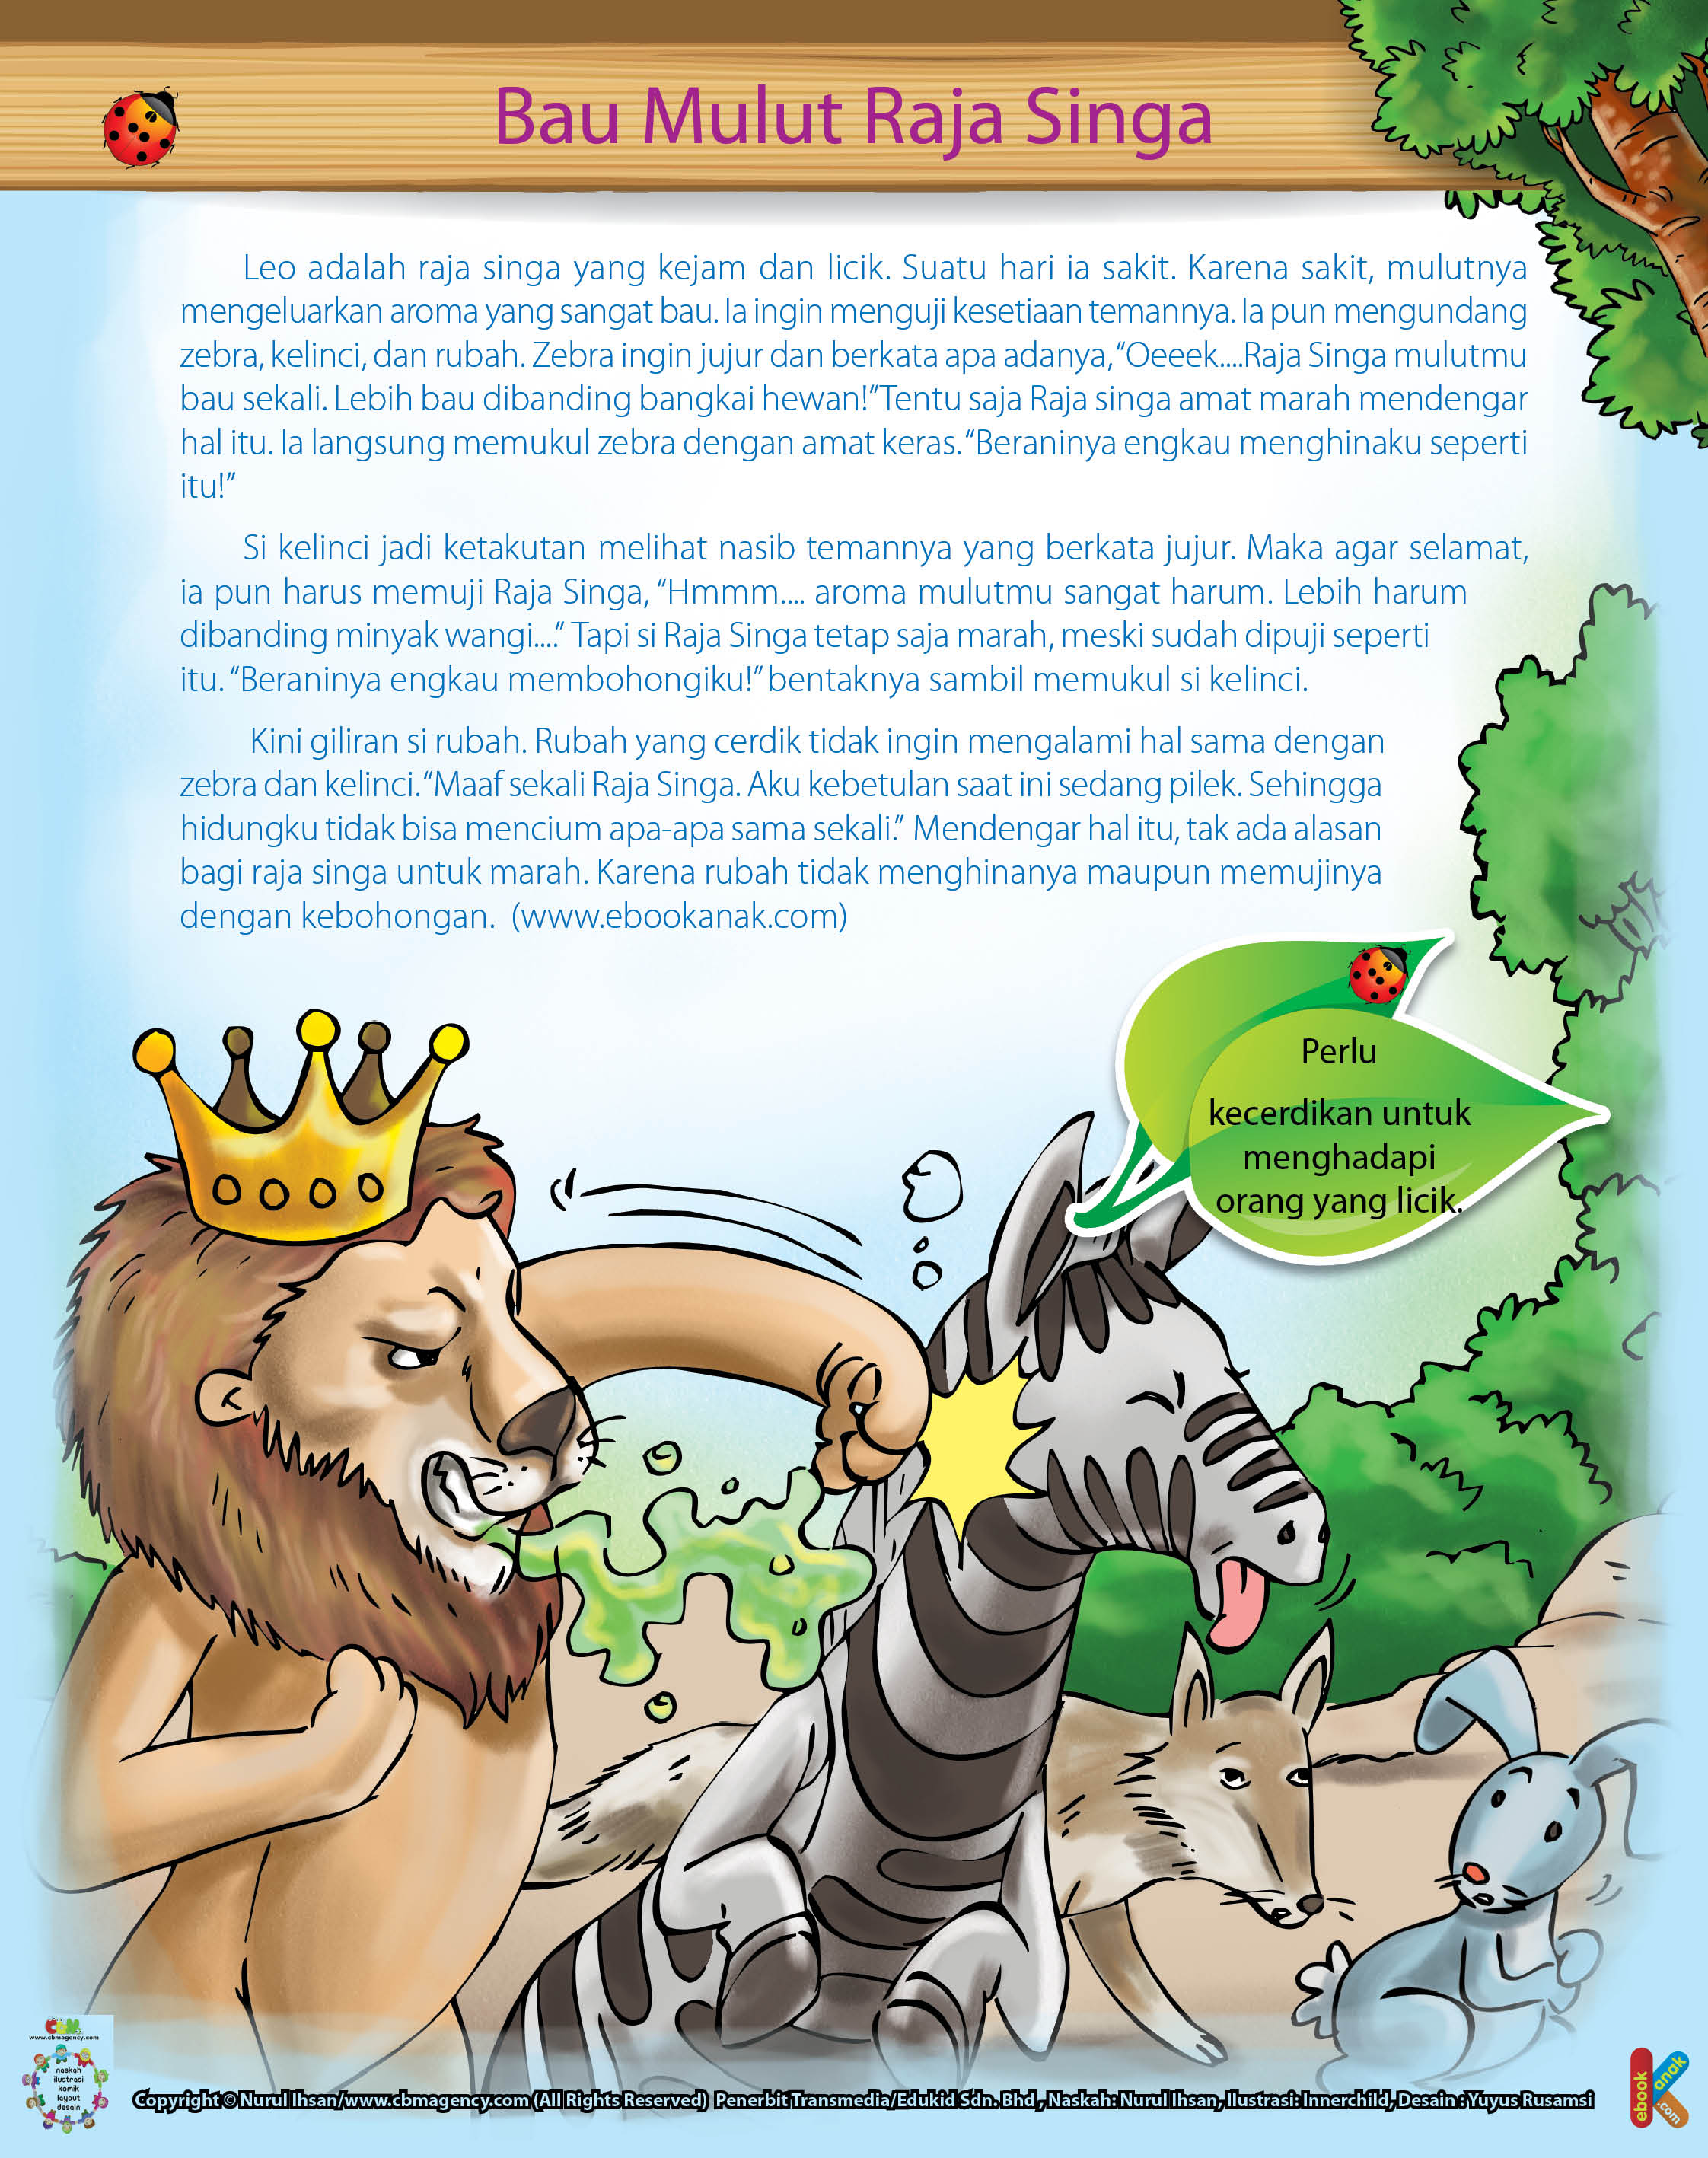 100 Dongeng Fabel Pilihanjpg 71 Bau Mulut Raja Singa Ebook Anak